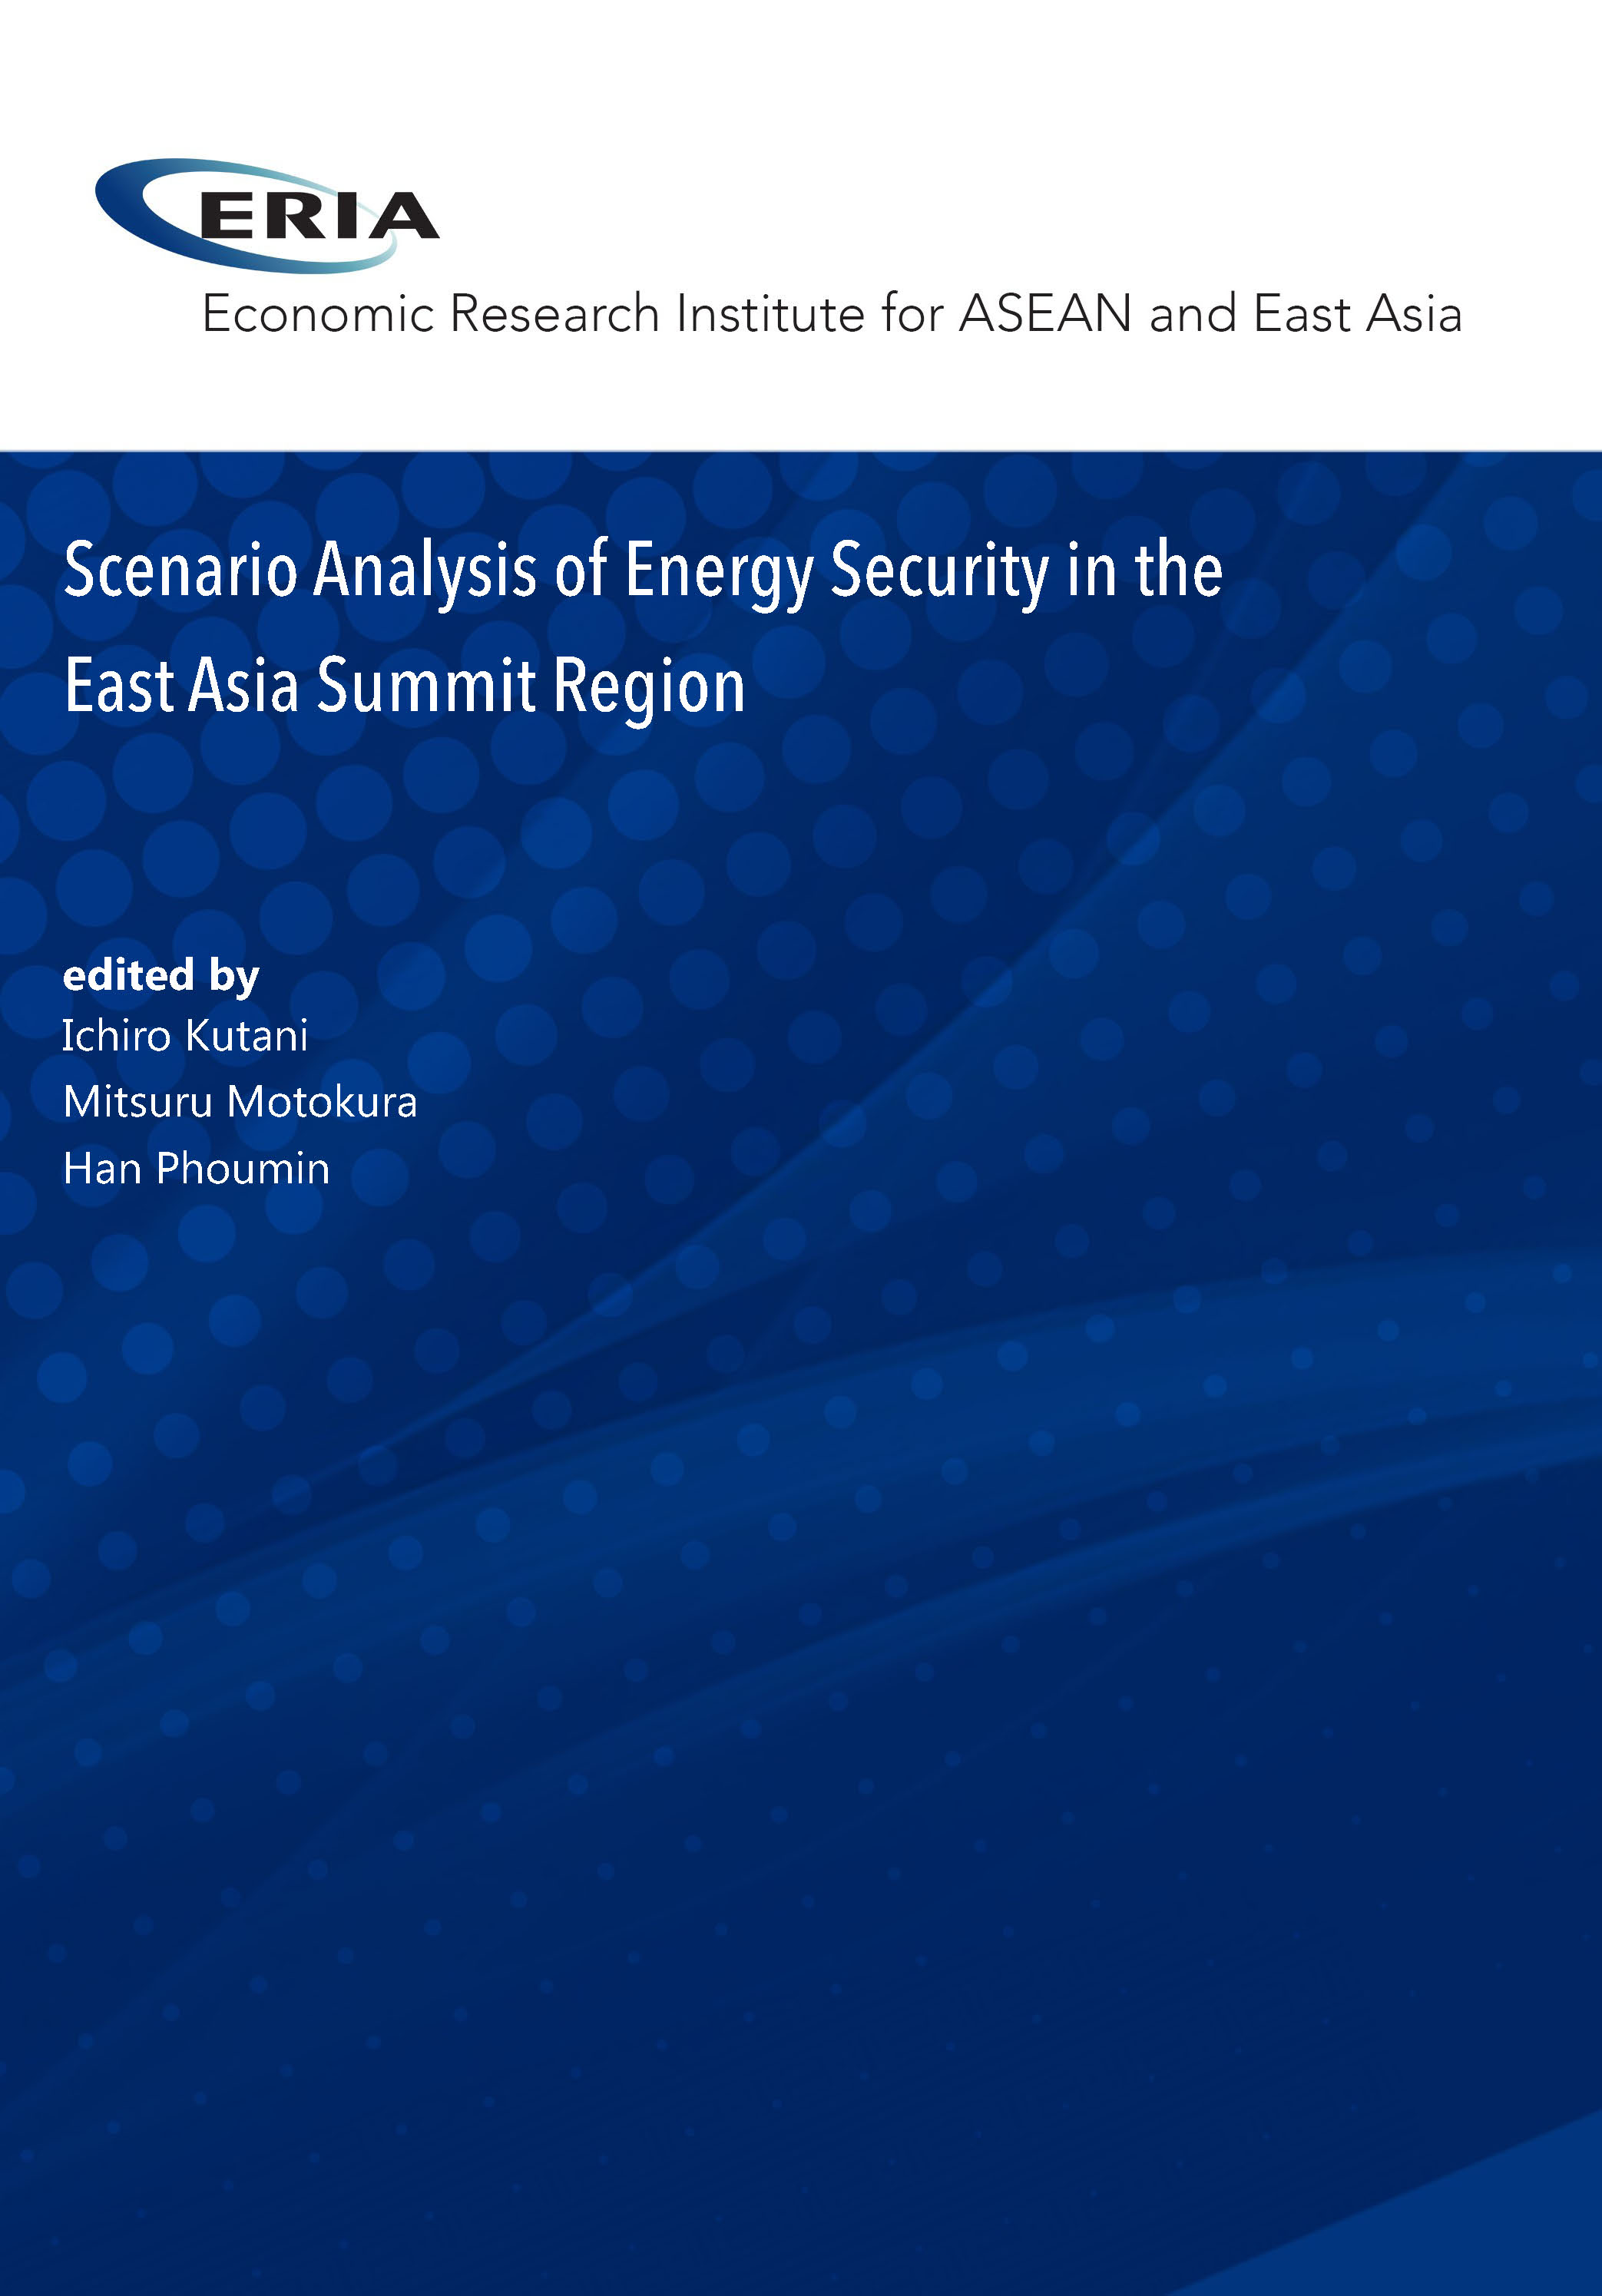 Scenario Analysis of Energy Security in the East Asia Summit Region